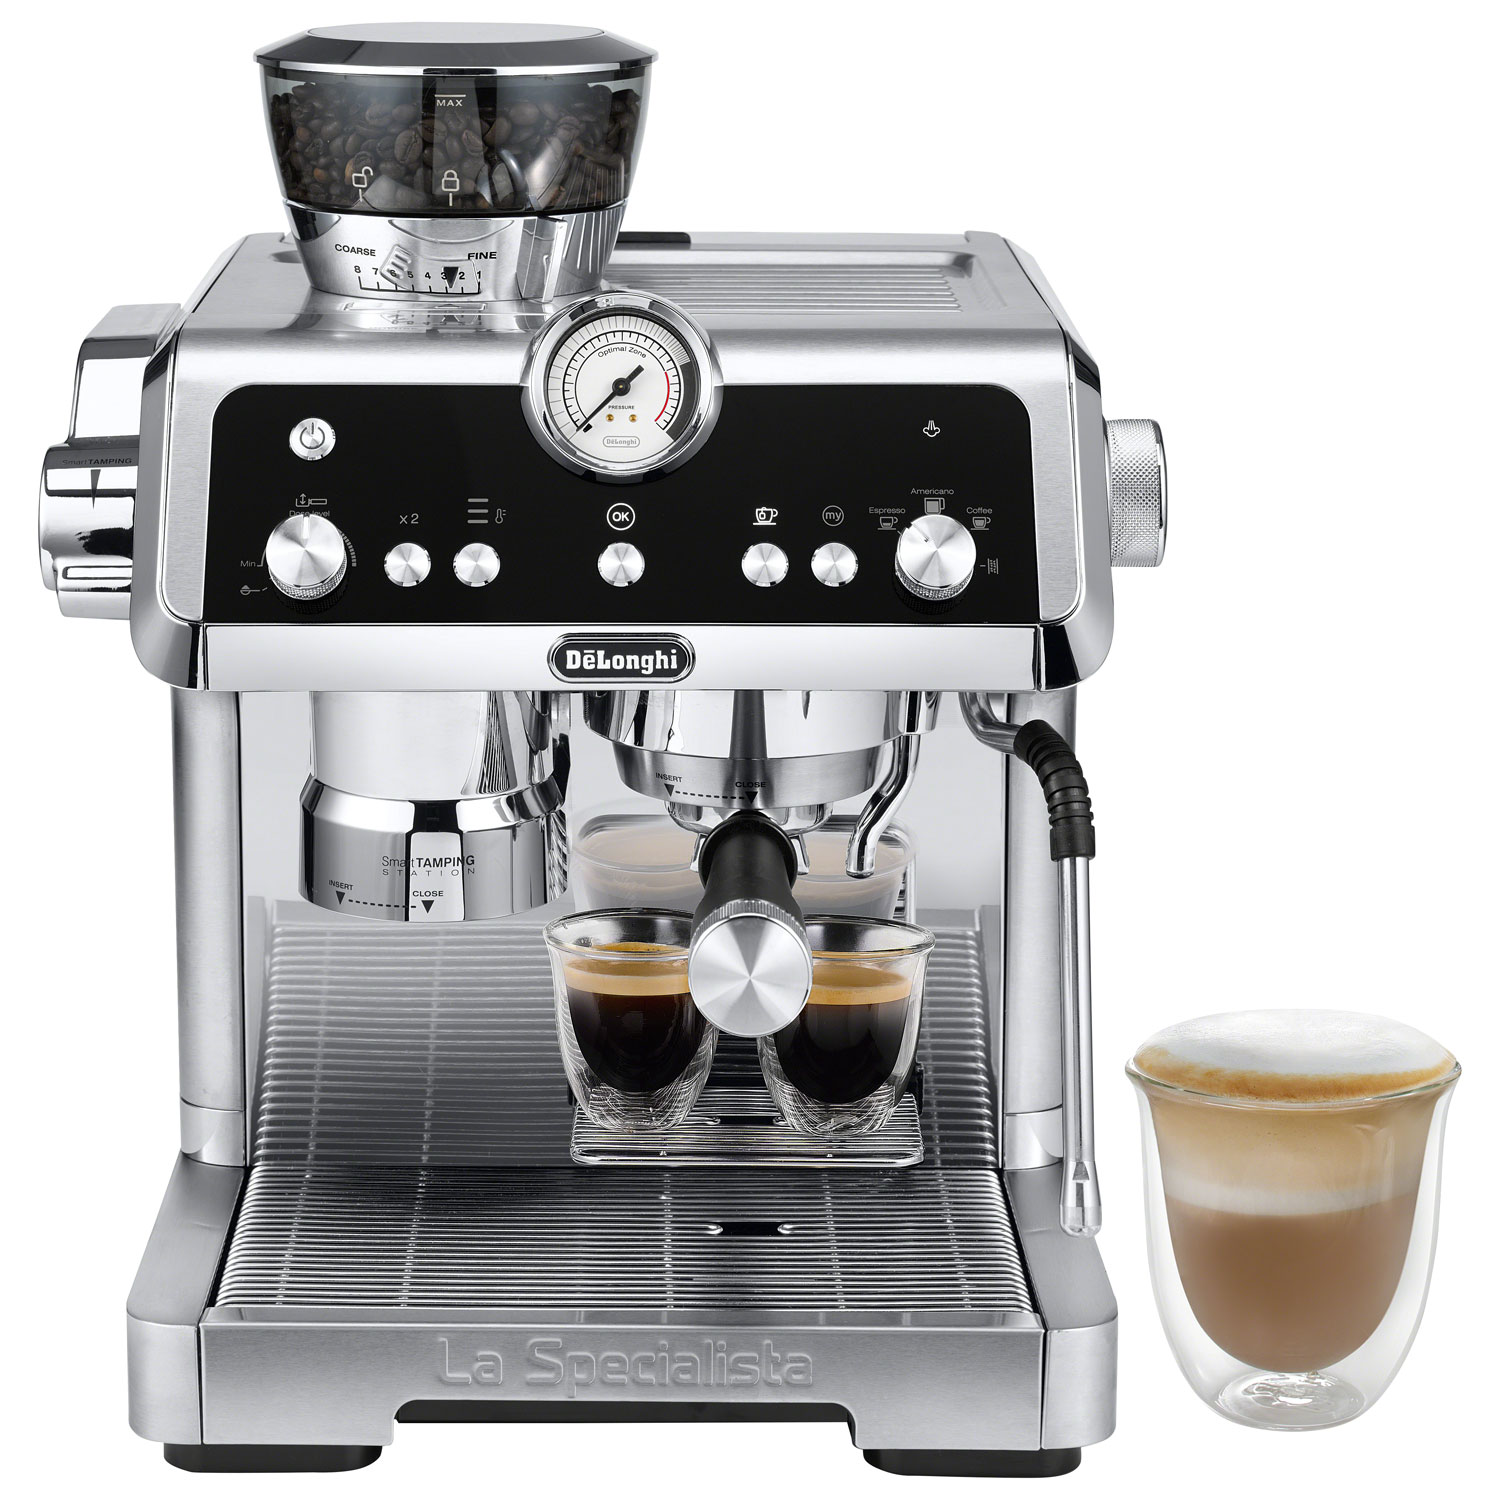 De'Longhi La Specialista Prestigio Manual Espresso Machine with Frother & Coffee Grinder - Stainless